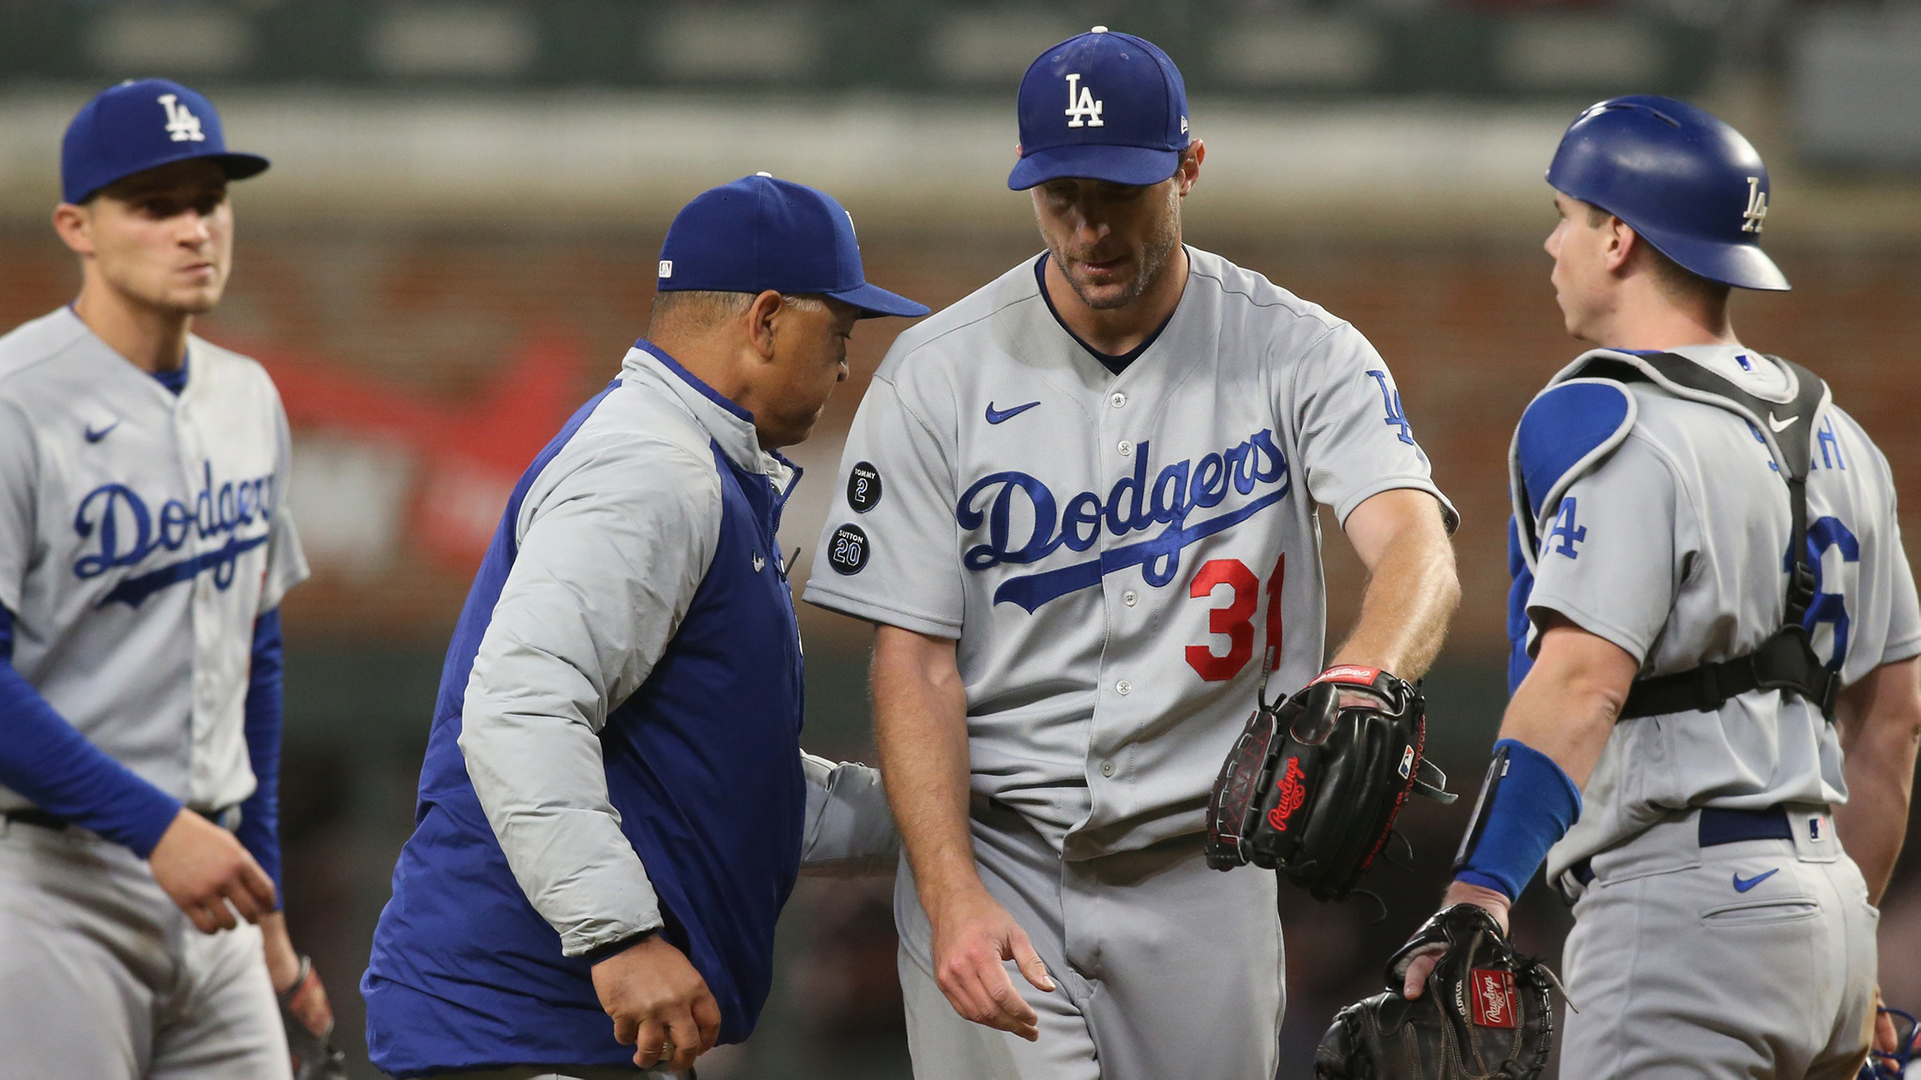 Report: Dodgers Scratch Max Scherzer From Game 6 Start Due to Fatigue